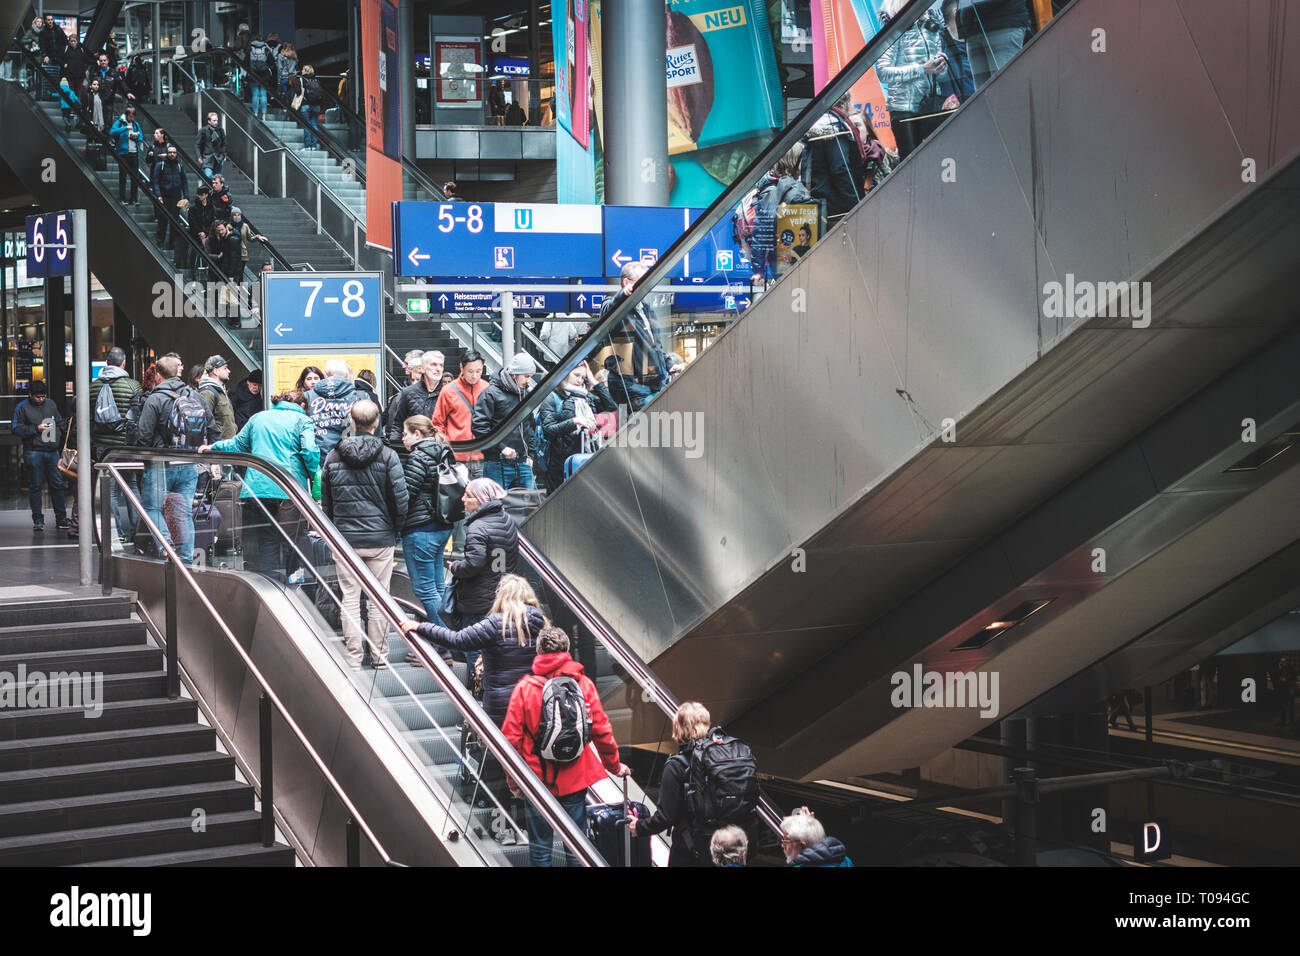 Berlin, Germany - march 2019: Traveling people on crowded   escalator inside  train station (Hauptbahnhof) in Berlin, Germany Stock Photo